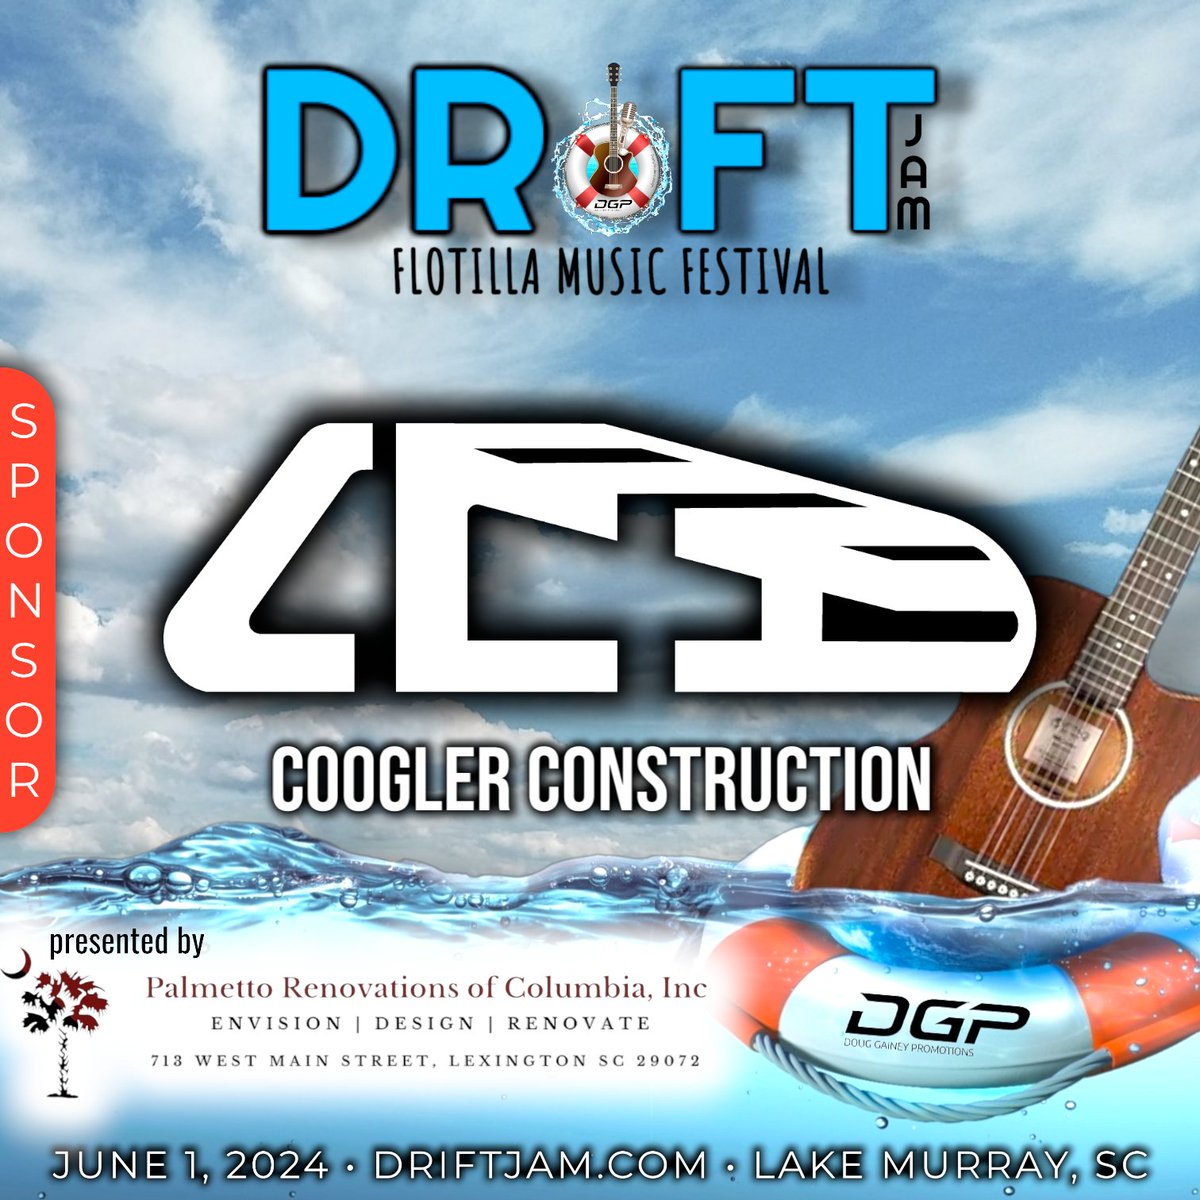 #sponsored ➡️ Coogler Construction 
.
.
#driftjam #driftjam2024 #FloatingFestival #MusicOnWater #FinalYear #SafeSailing #MusicCharity #LastChance #FOMO #BoatLife #LastCallOnTheLake